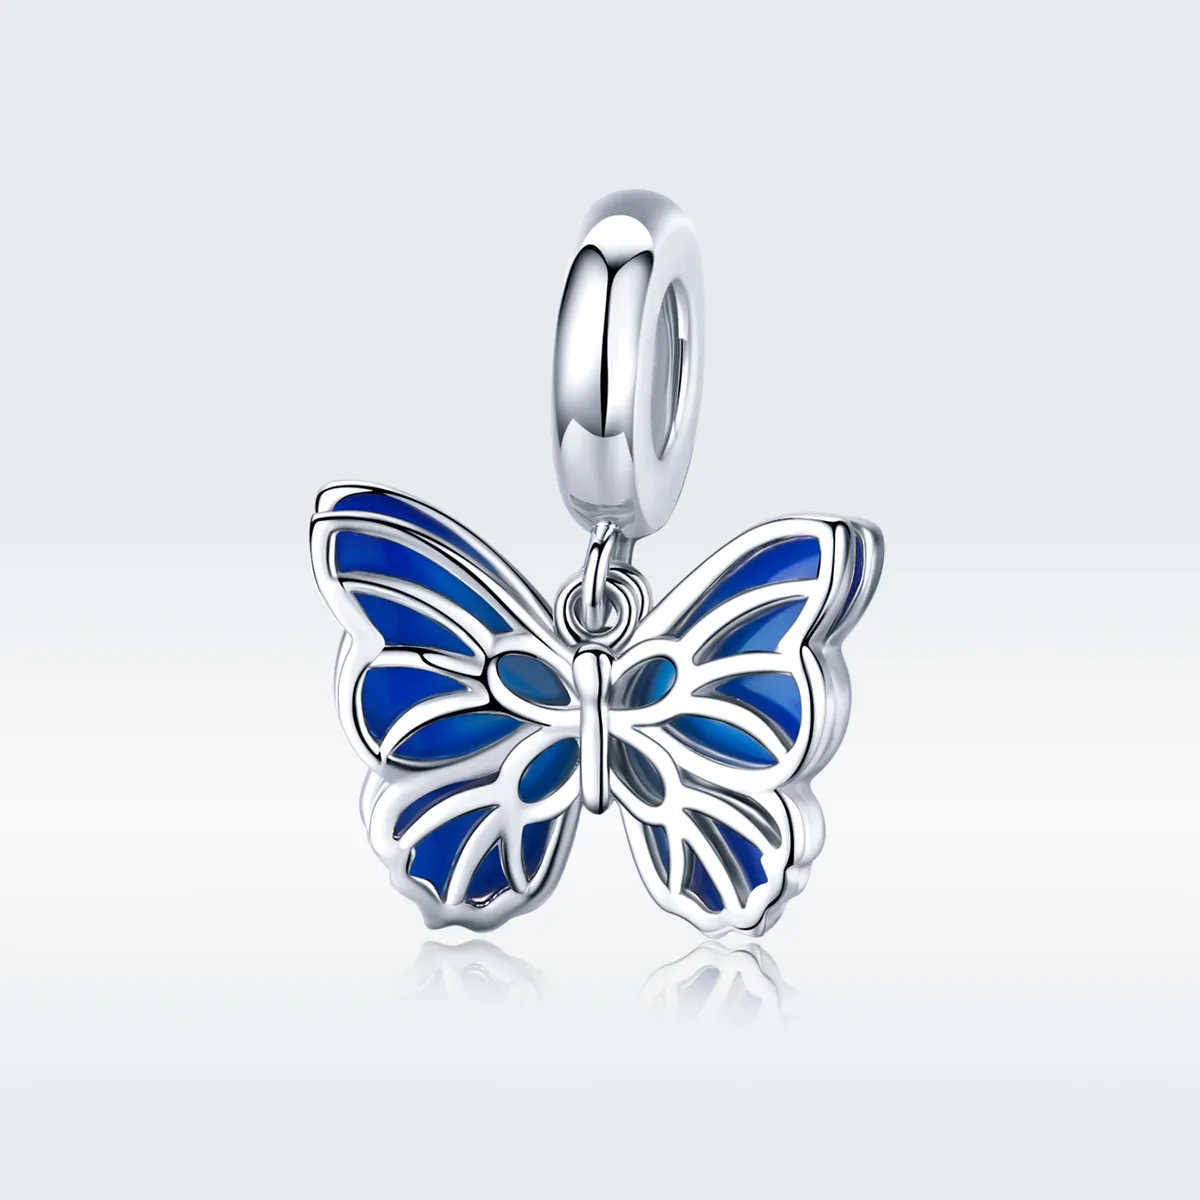 Talisman pandantiv Tip Pandora cu Fluture din argint - BSC149